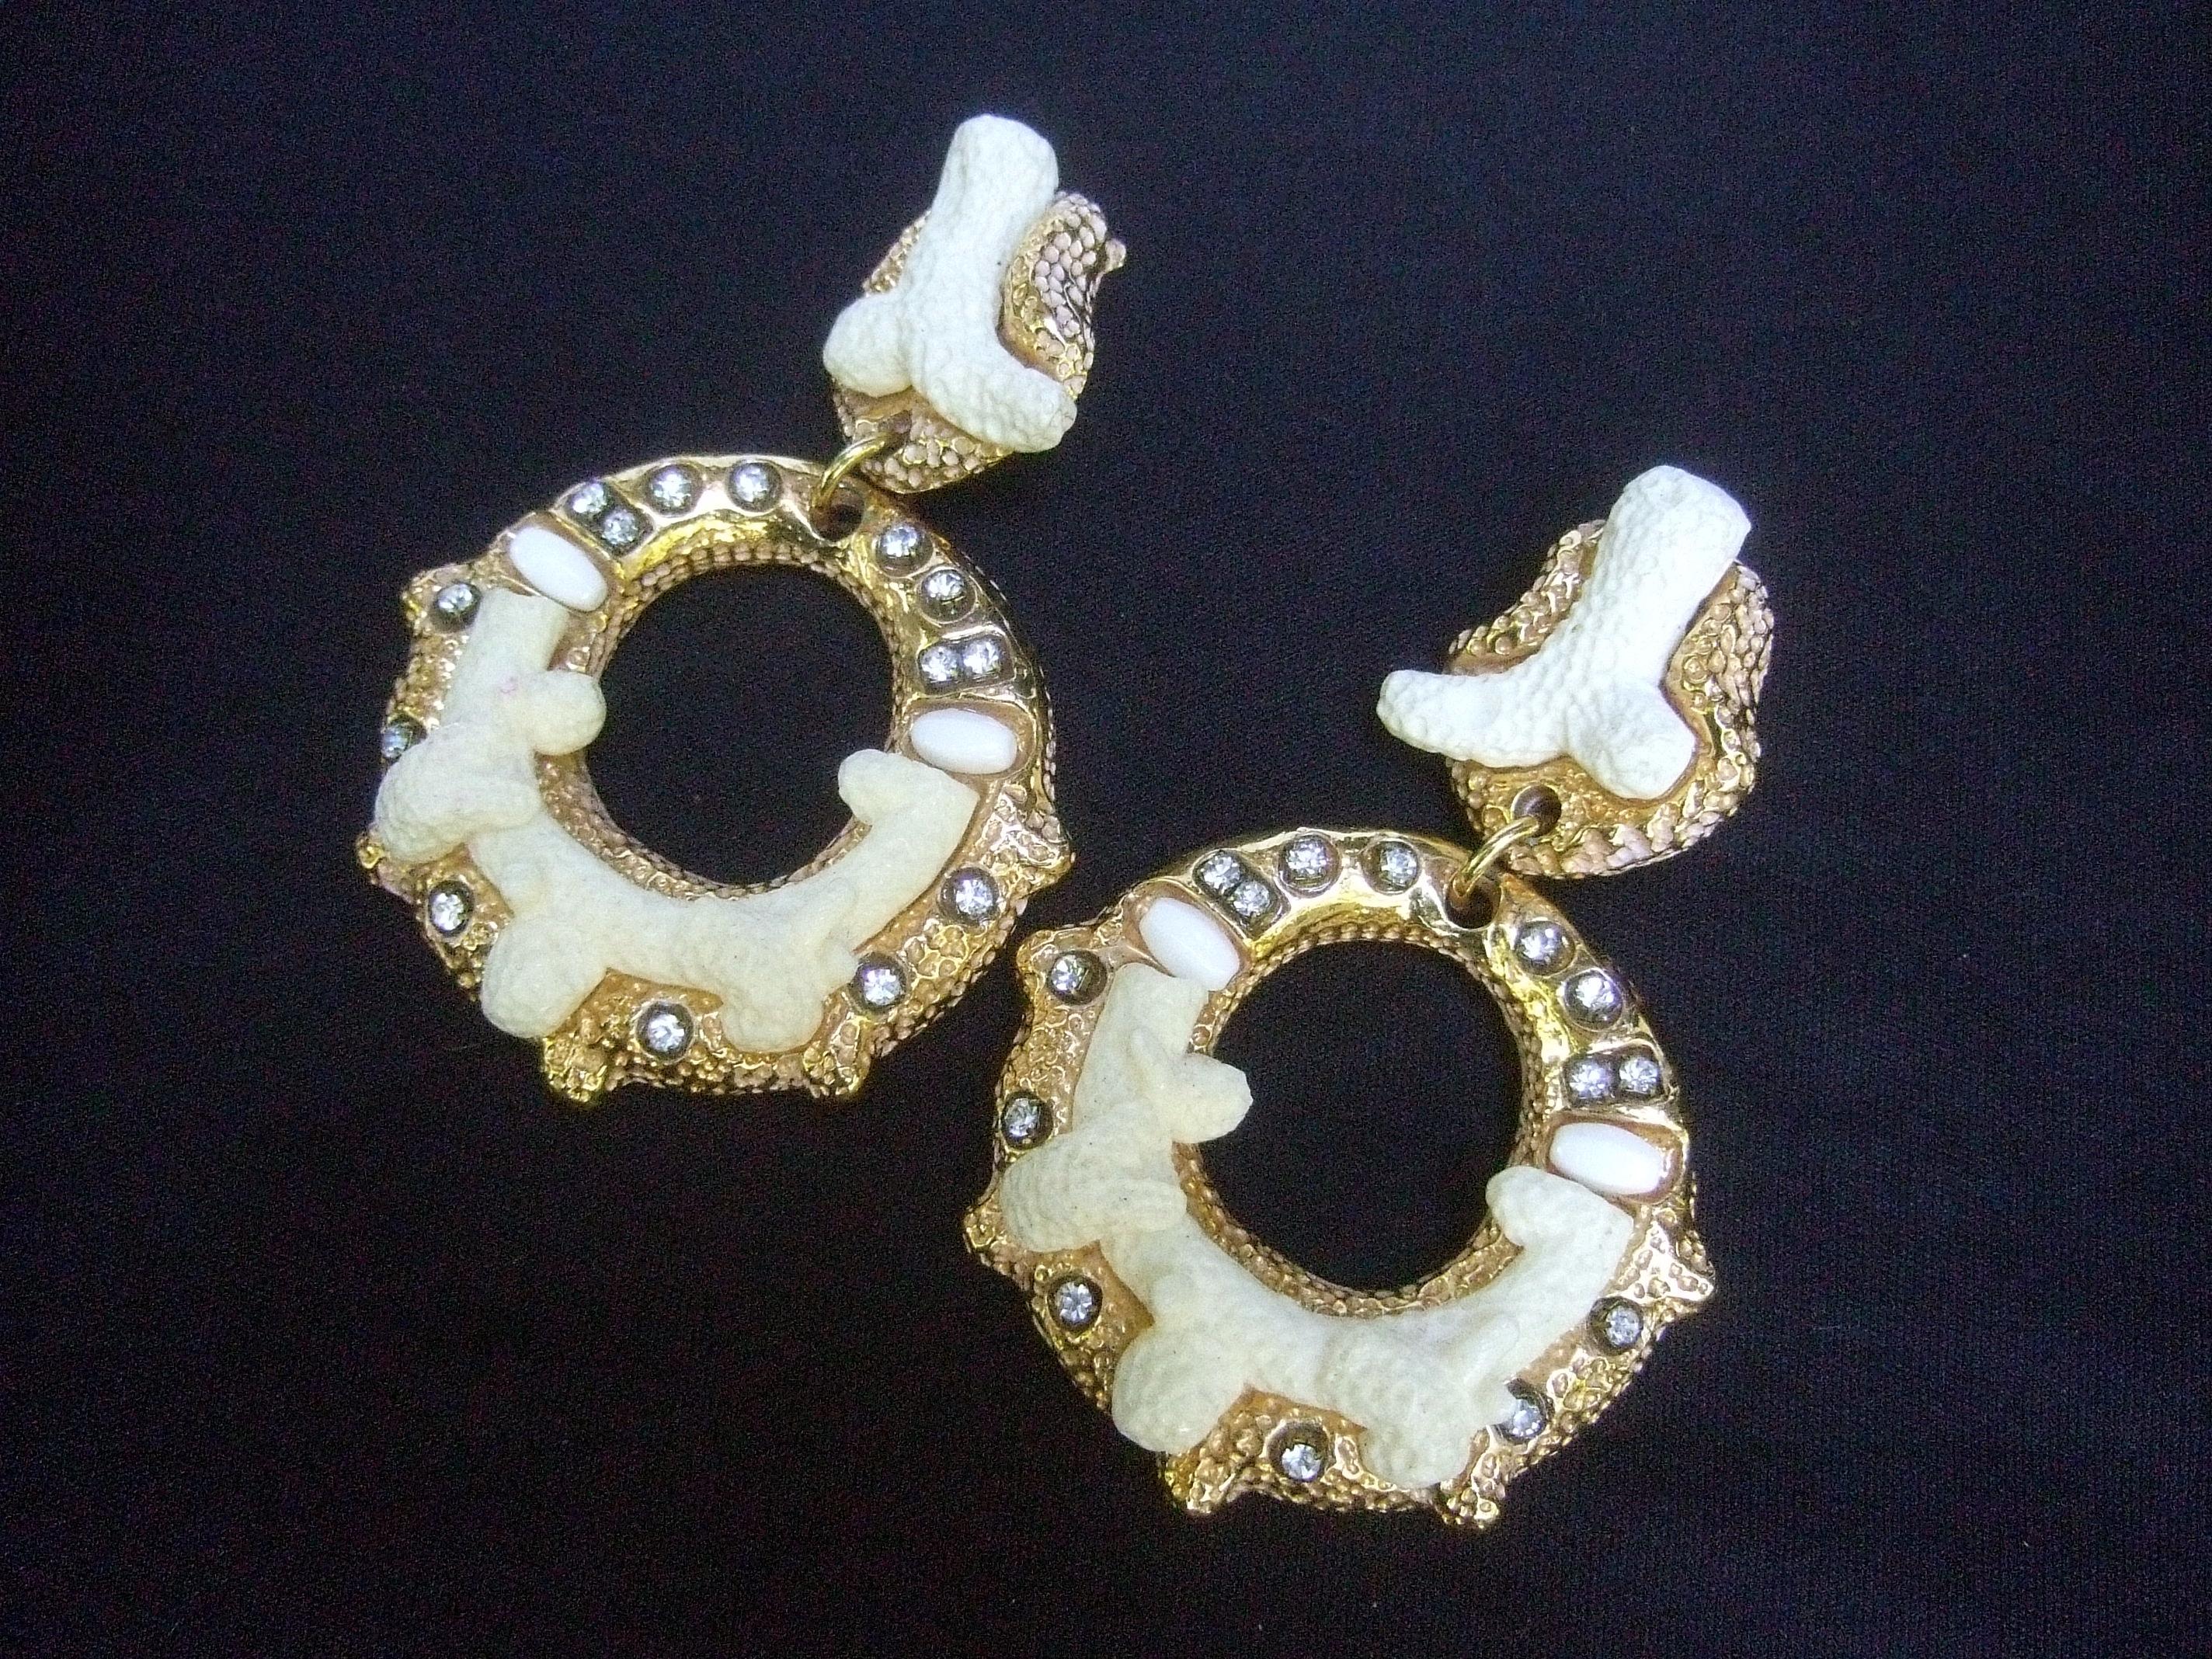 Women's Massive Faux Coral Branch Statement Earrings Designed by Kaliger Paris c 1990s